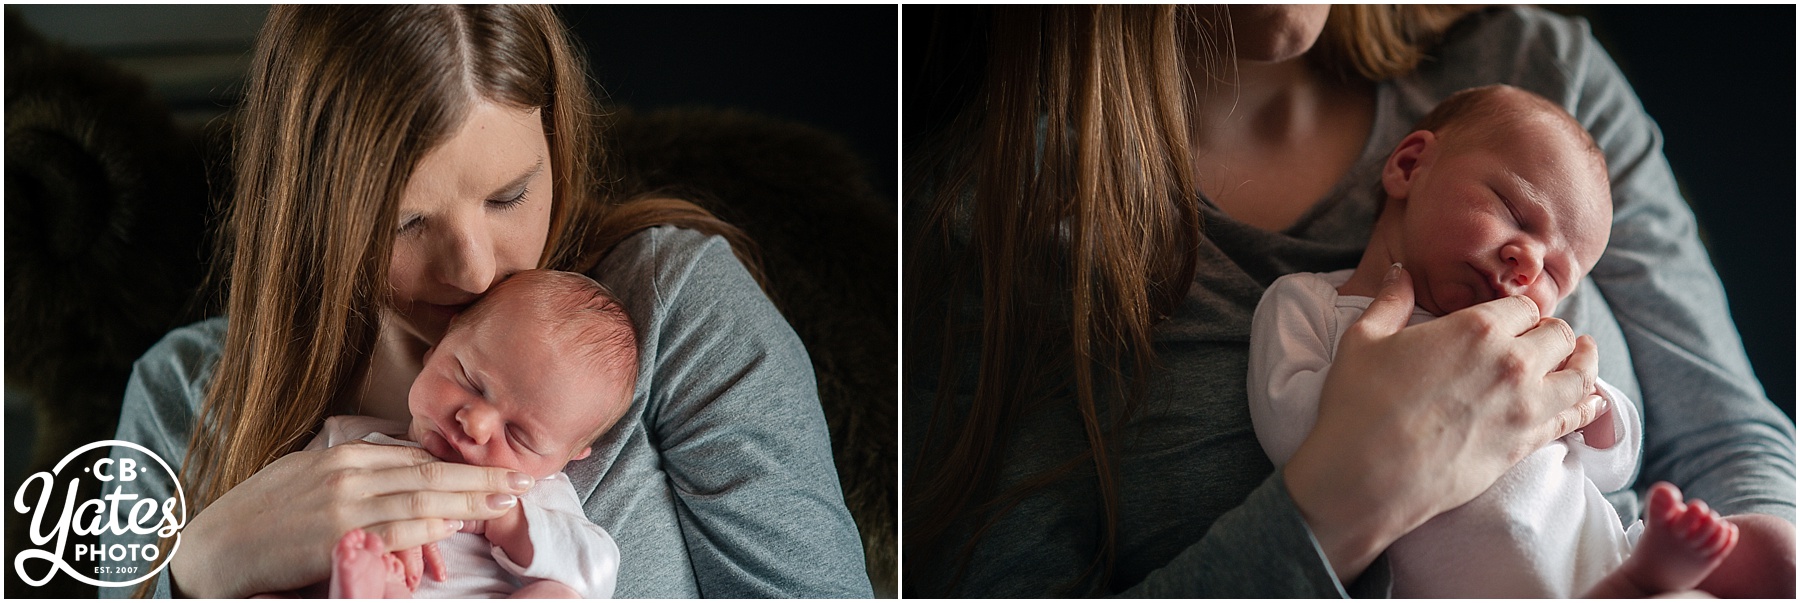 newborn baby photography cuddles